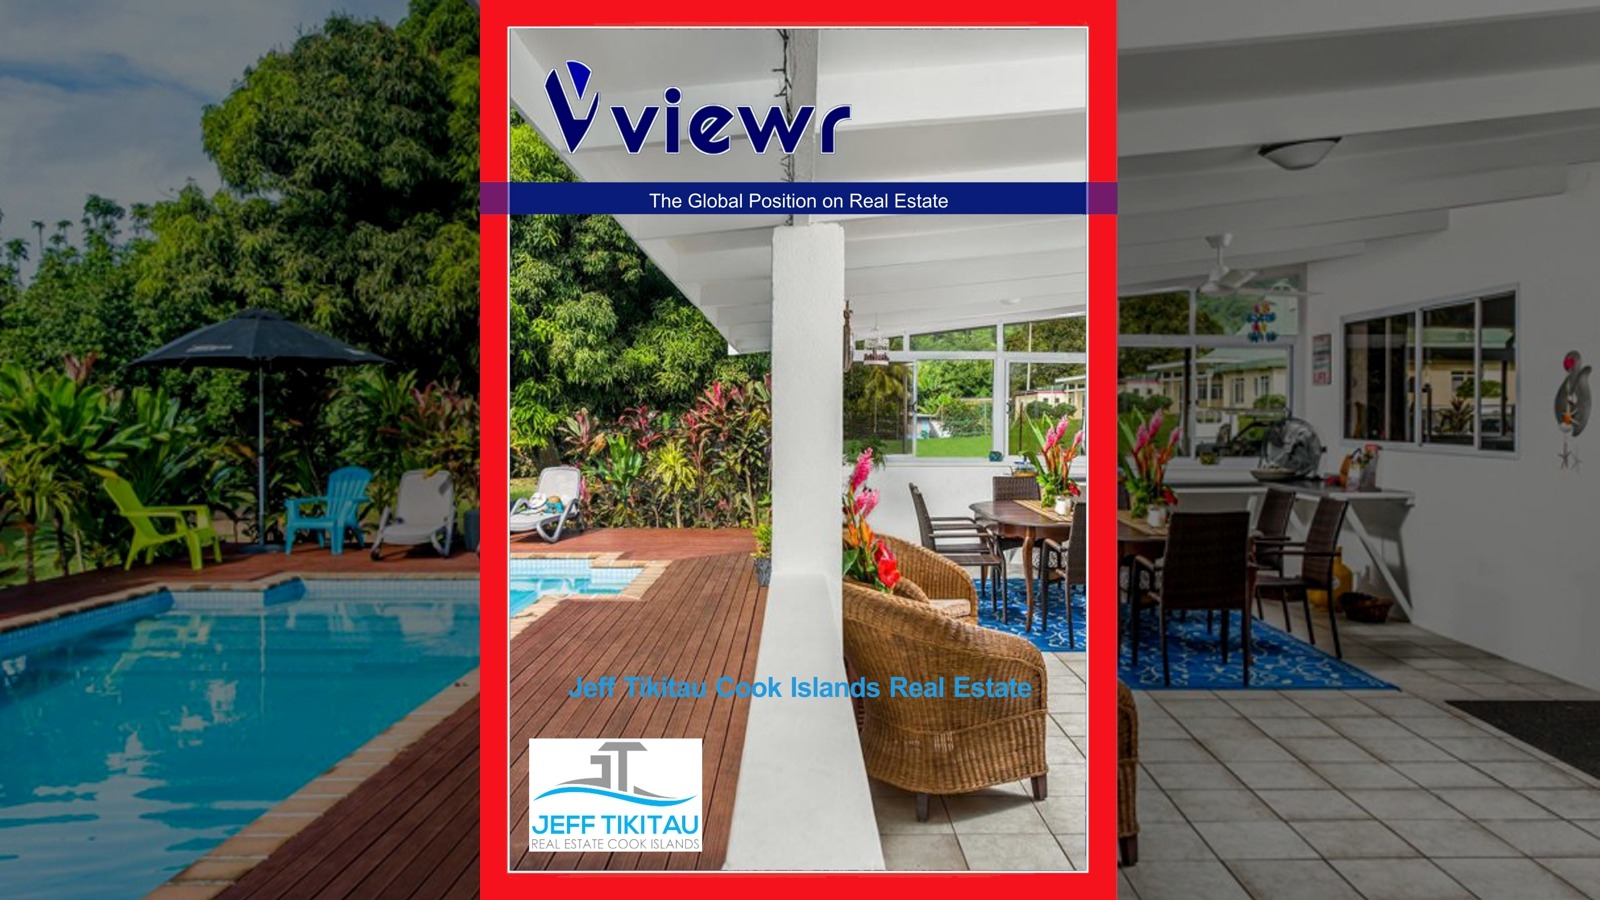 Global viewr Magazine Jeff Tikitau Cook Islands Real Estate 2